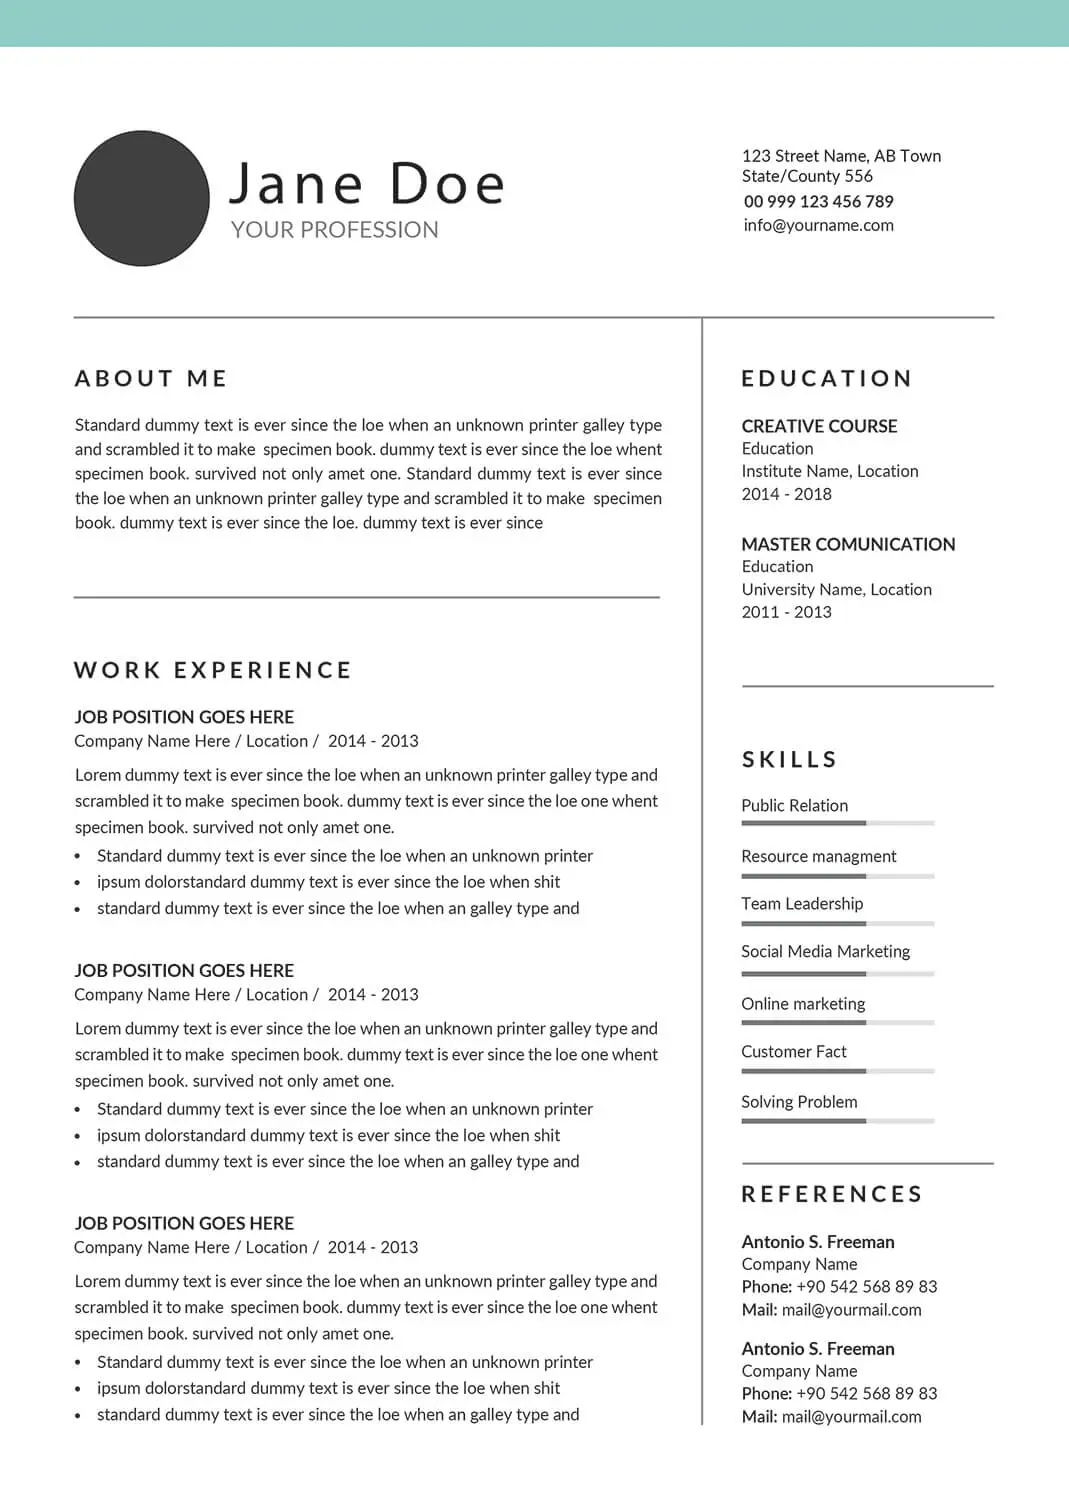 caregiver-resume